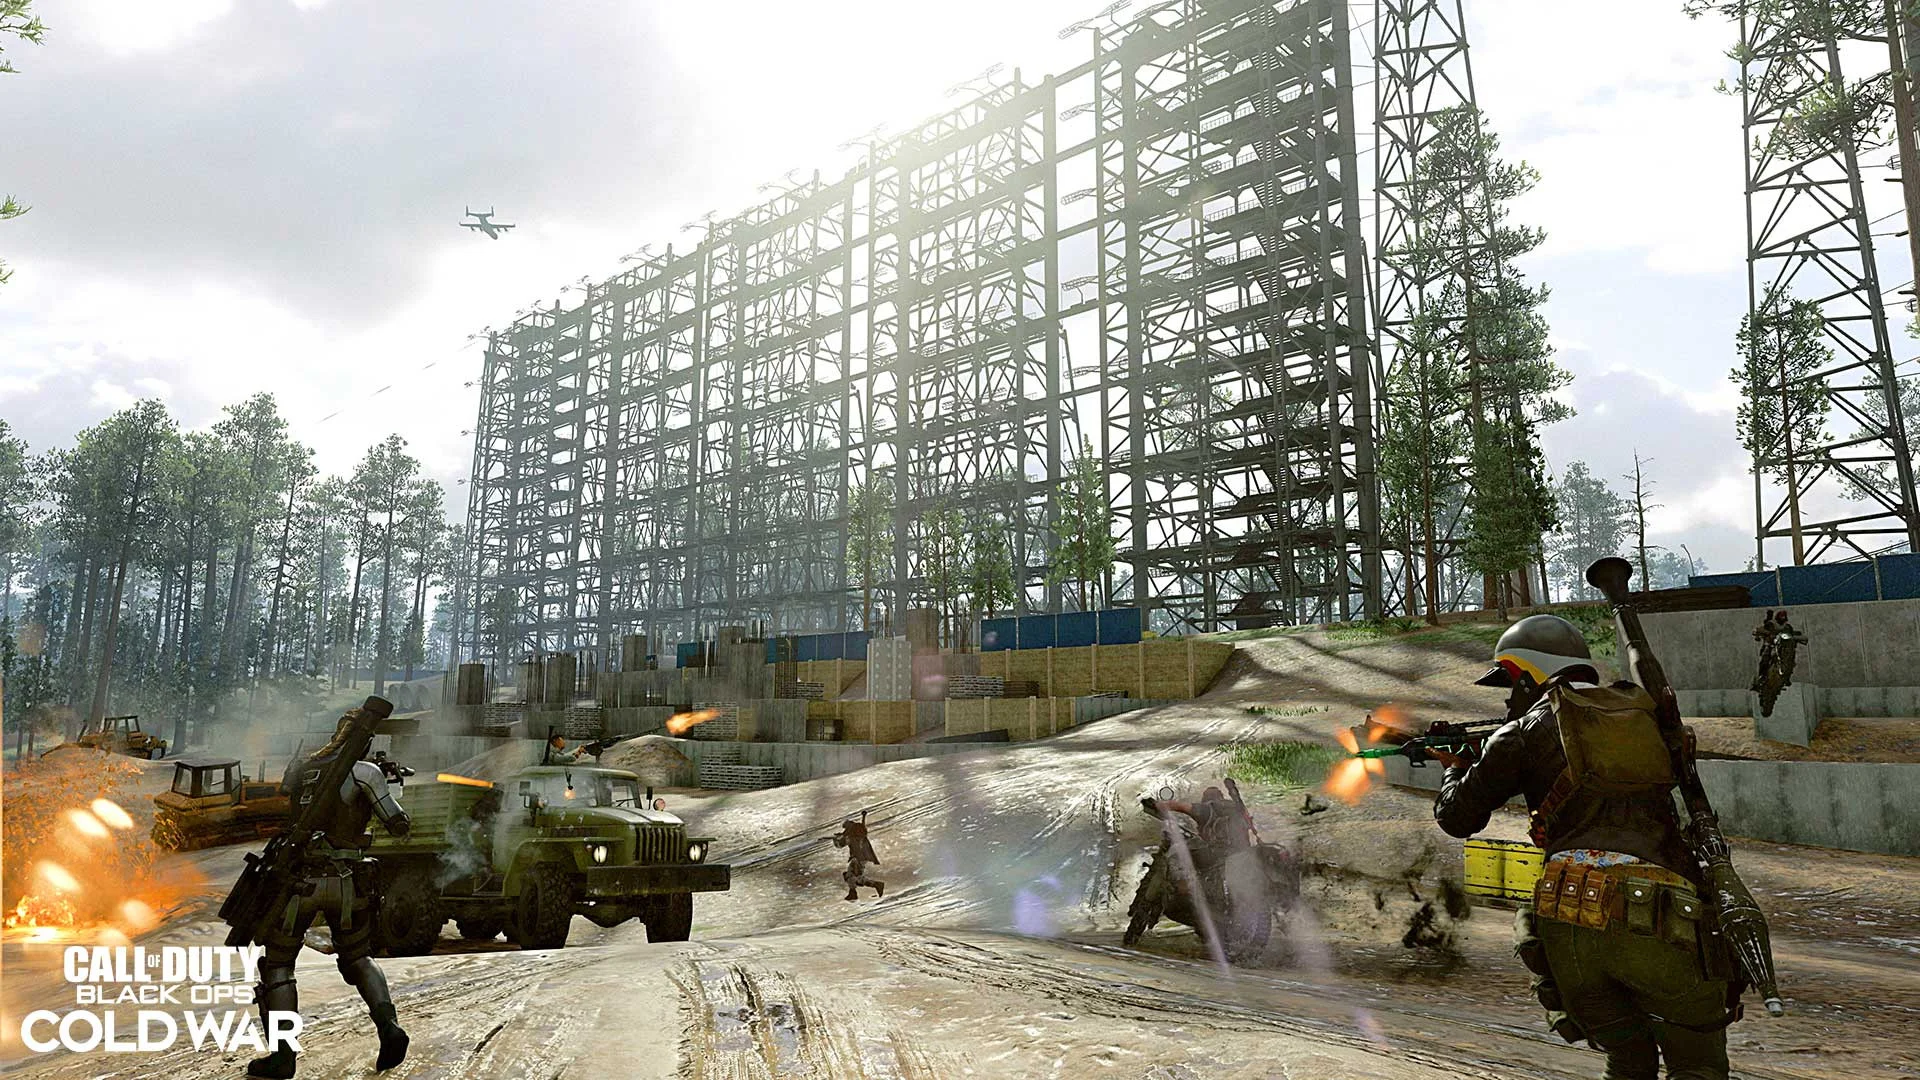 Прайс, Затмение, 4 карты и другие новинки 3 сезона Call of Duty: Black Ops Cold War - фото 1